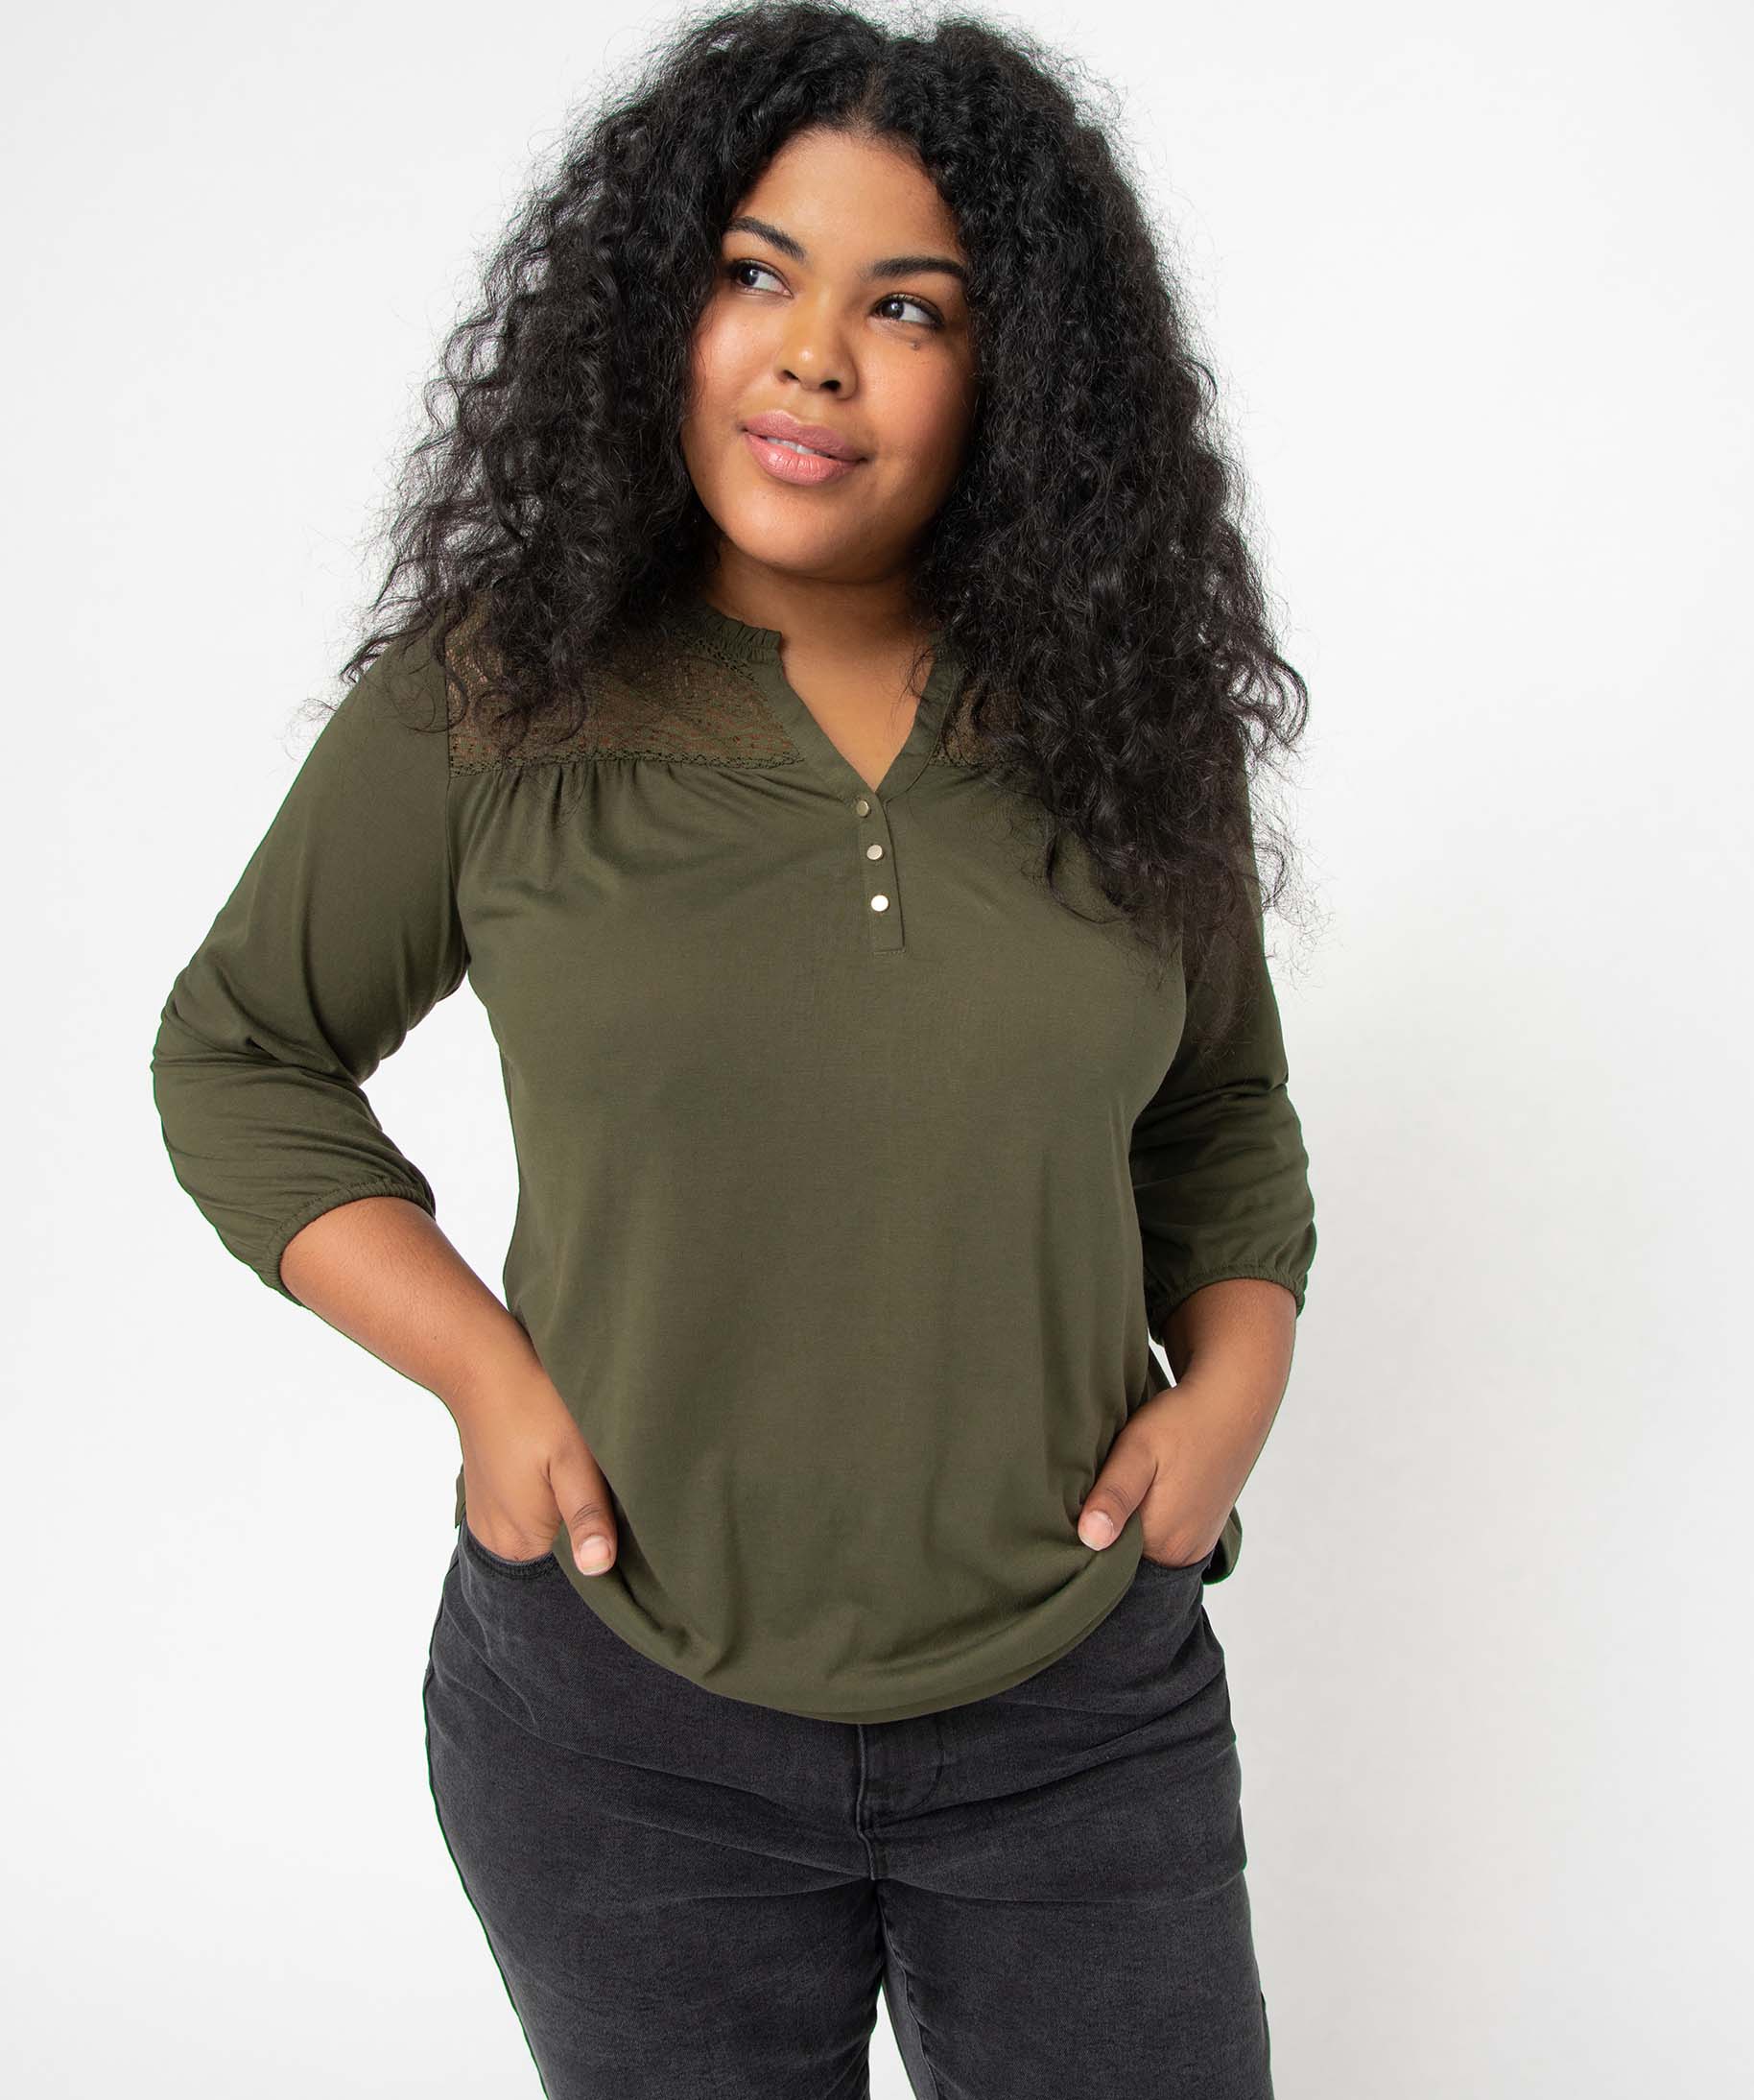 tee-shirt femme grande taille a dentelle et manches 34 vert t-shirts manches longues